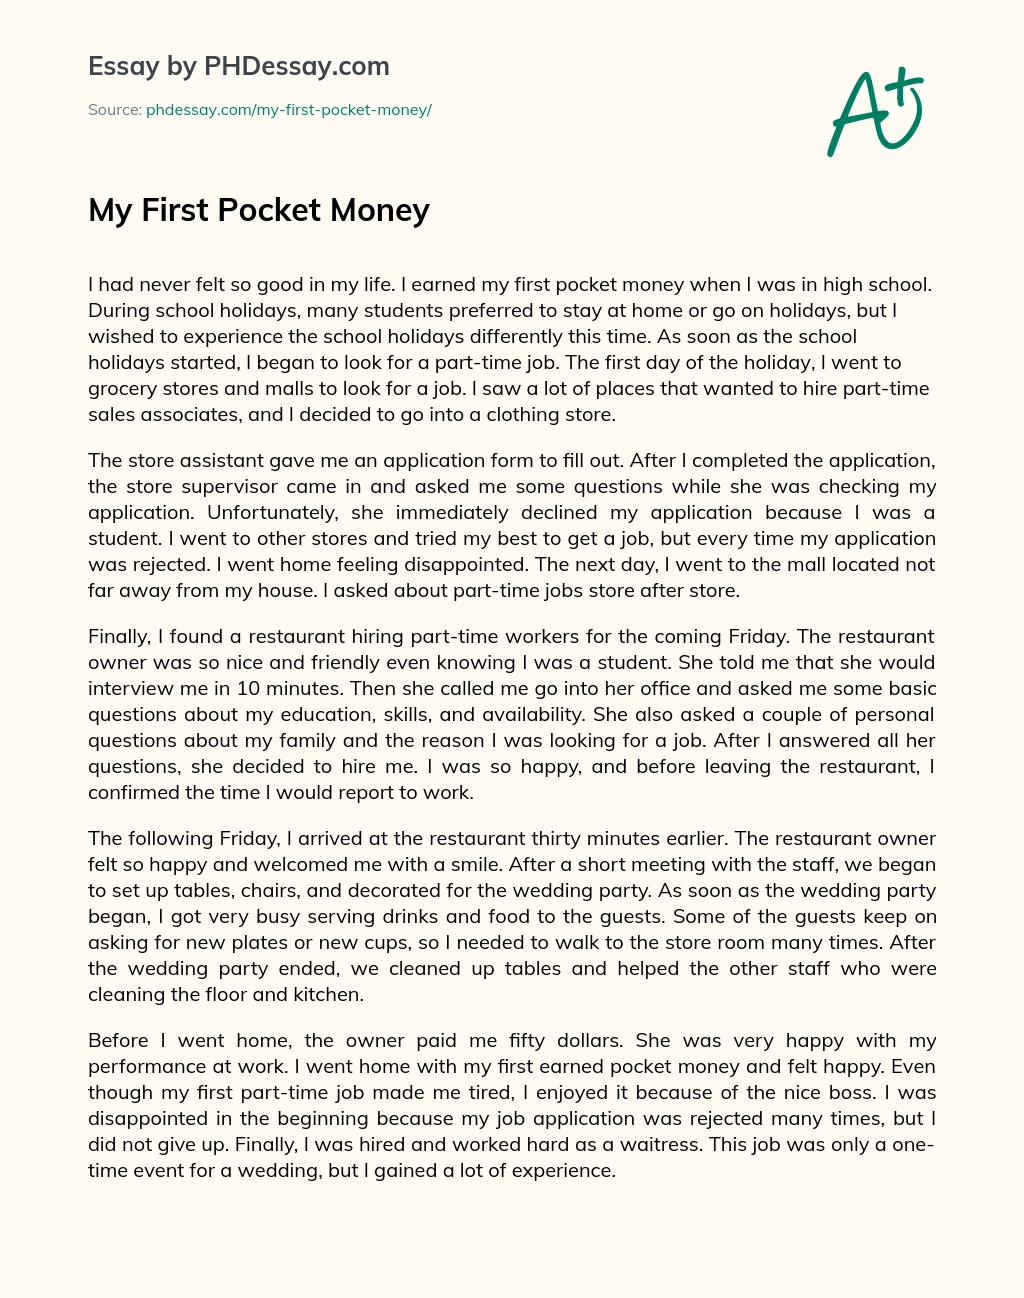 essay about pocket money